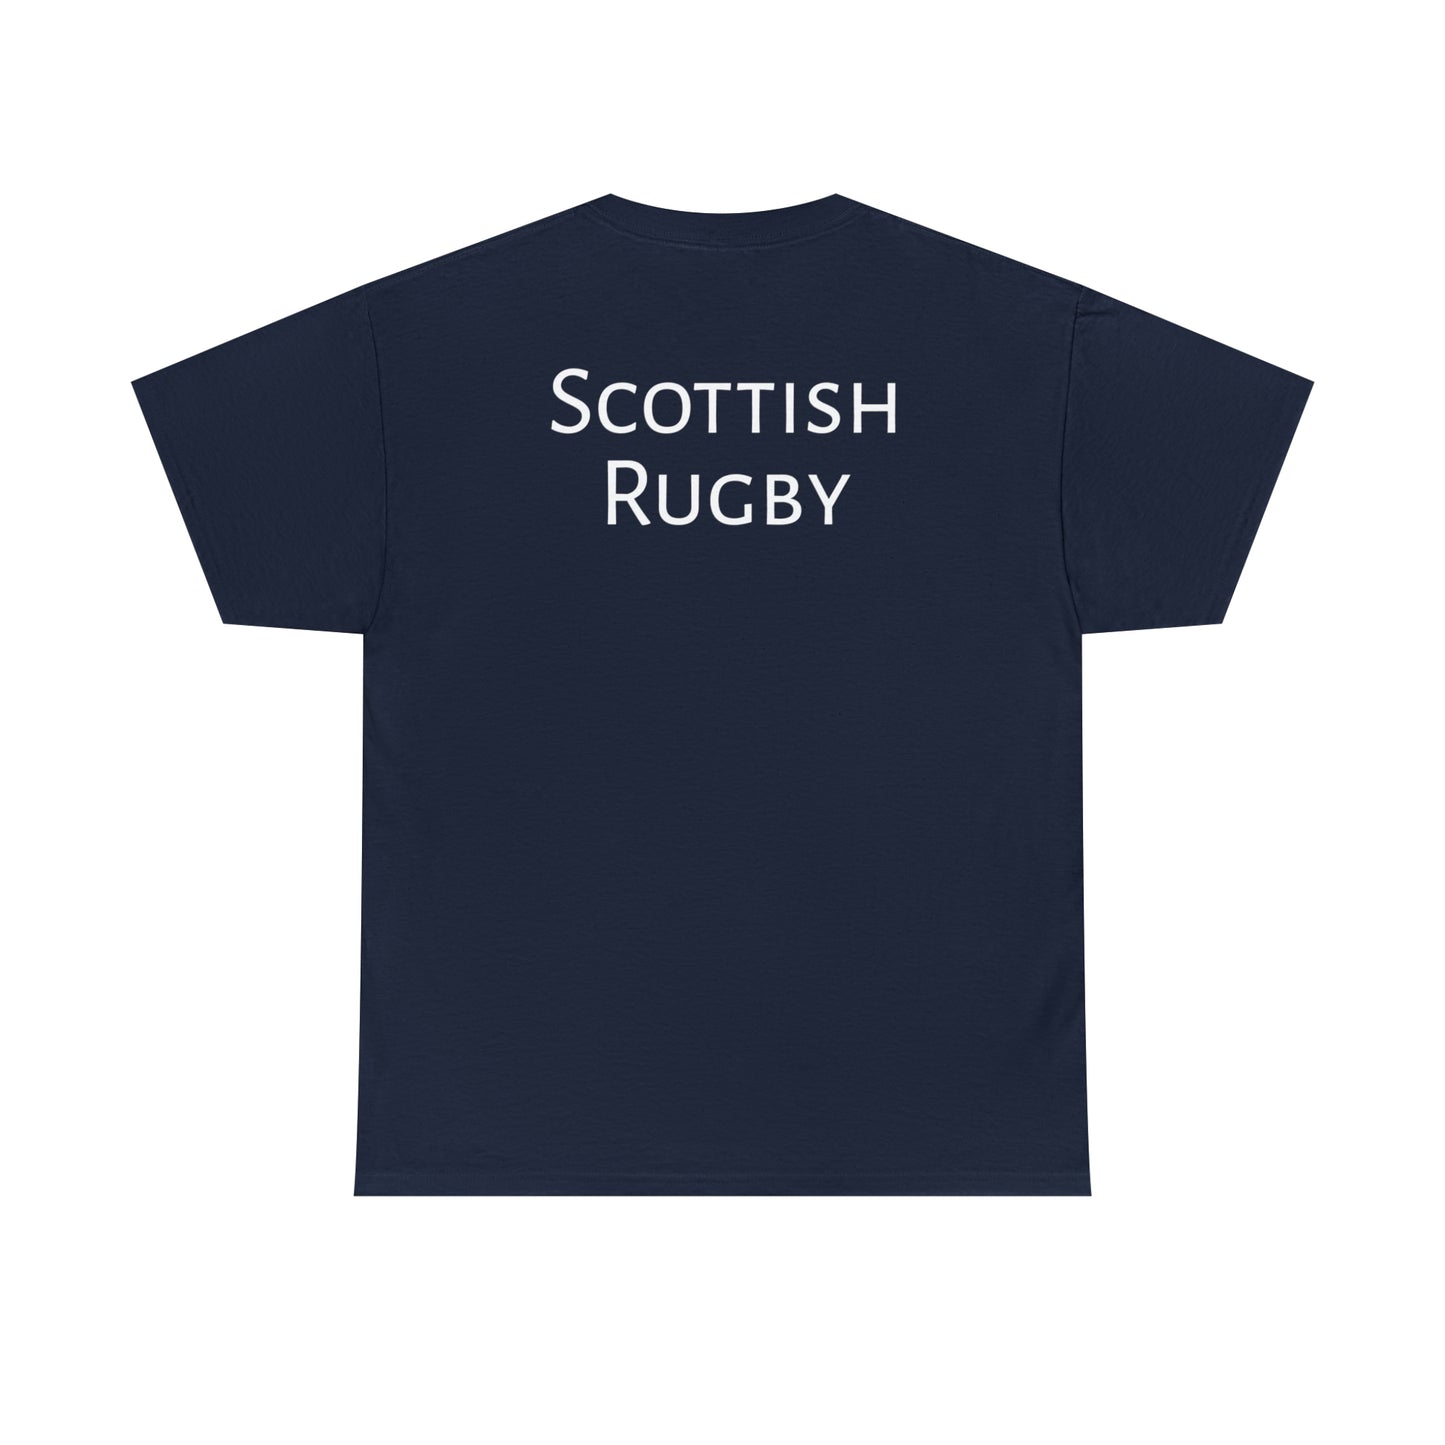 Post Match Scotland - dark shirts